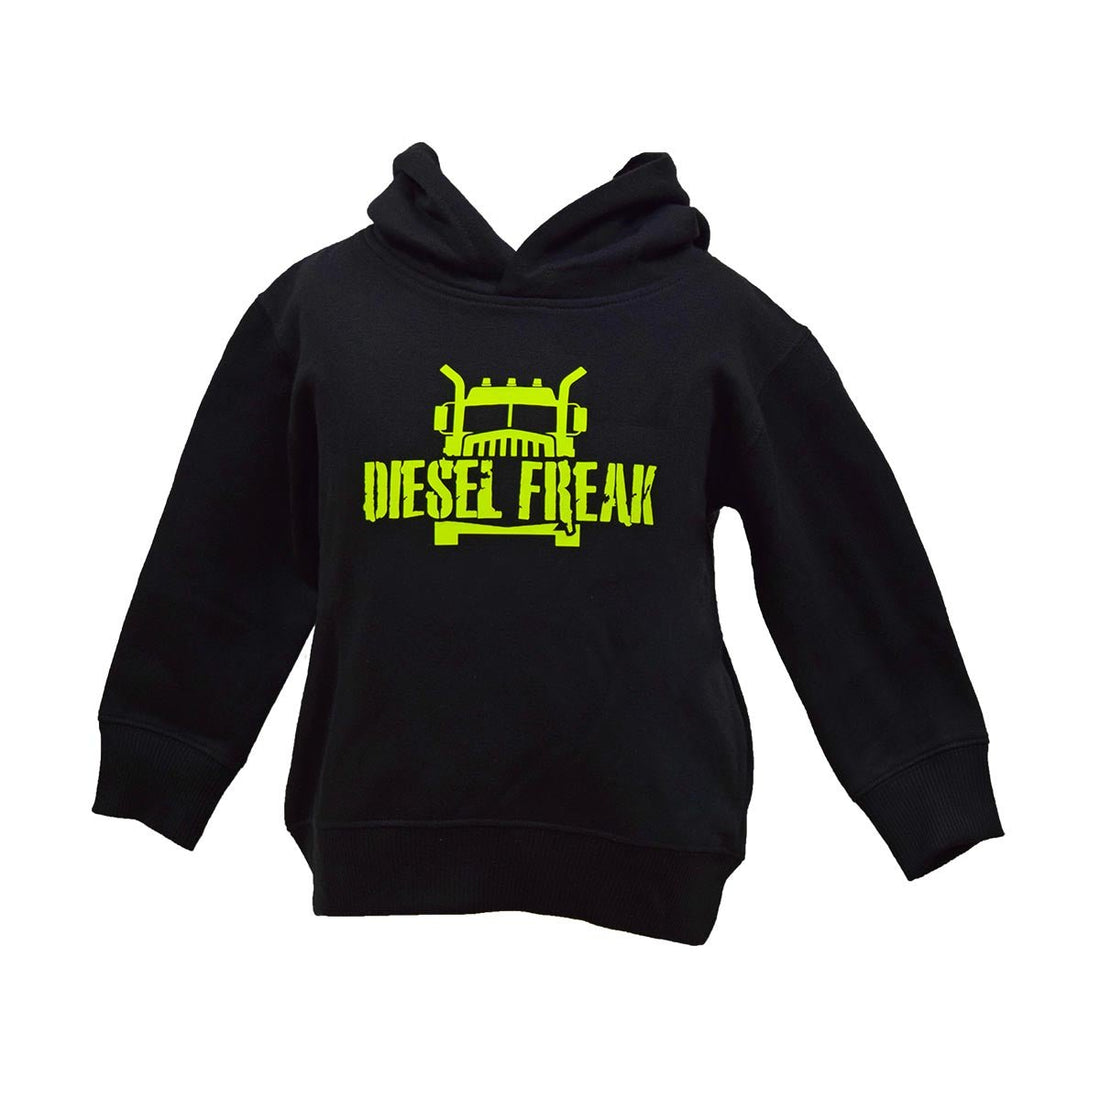 Truckin Freak Yellow & Black Youth Hoodie - Diesel Freak